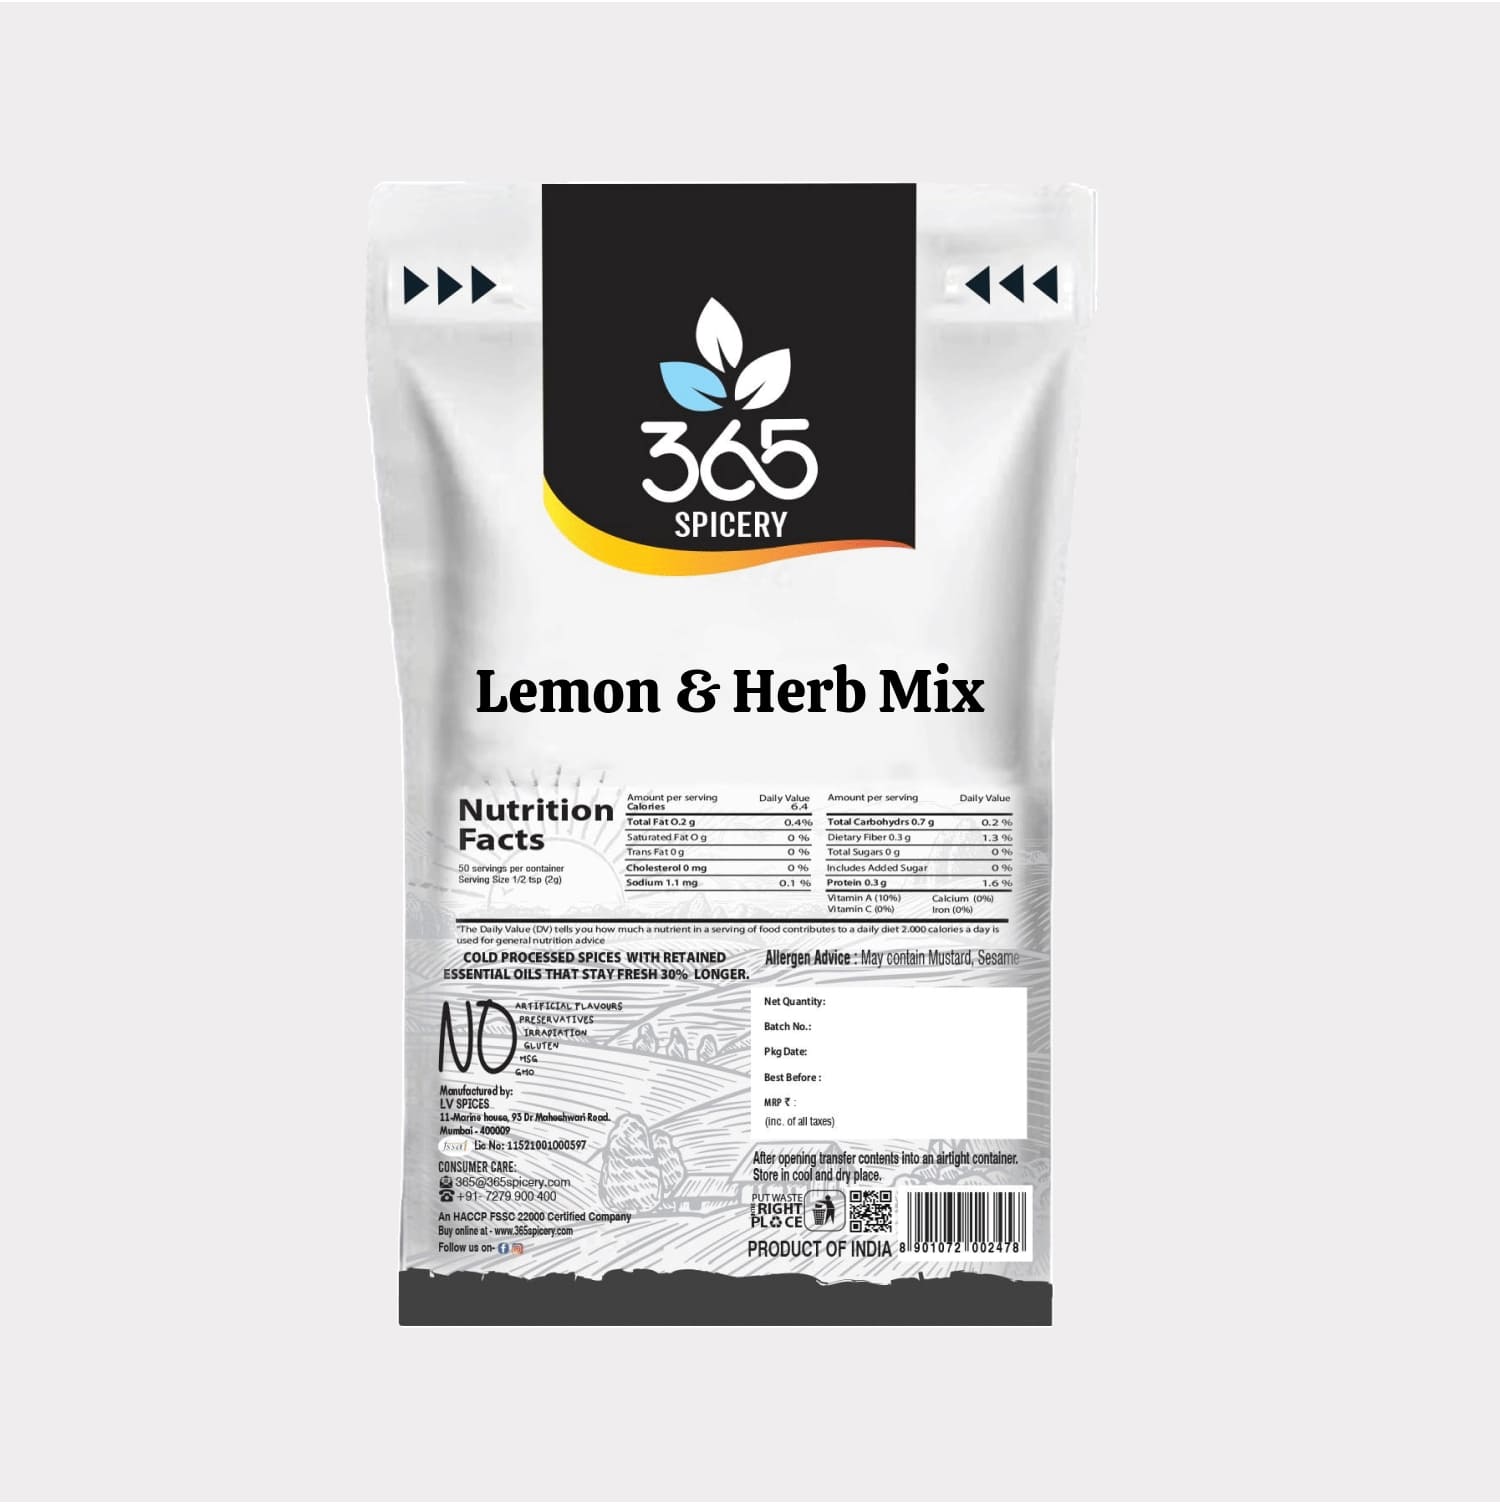 Lemon & Herb Mix